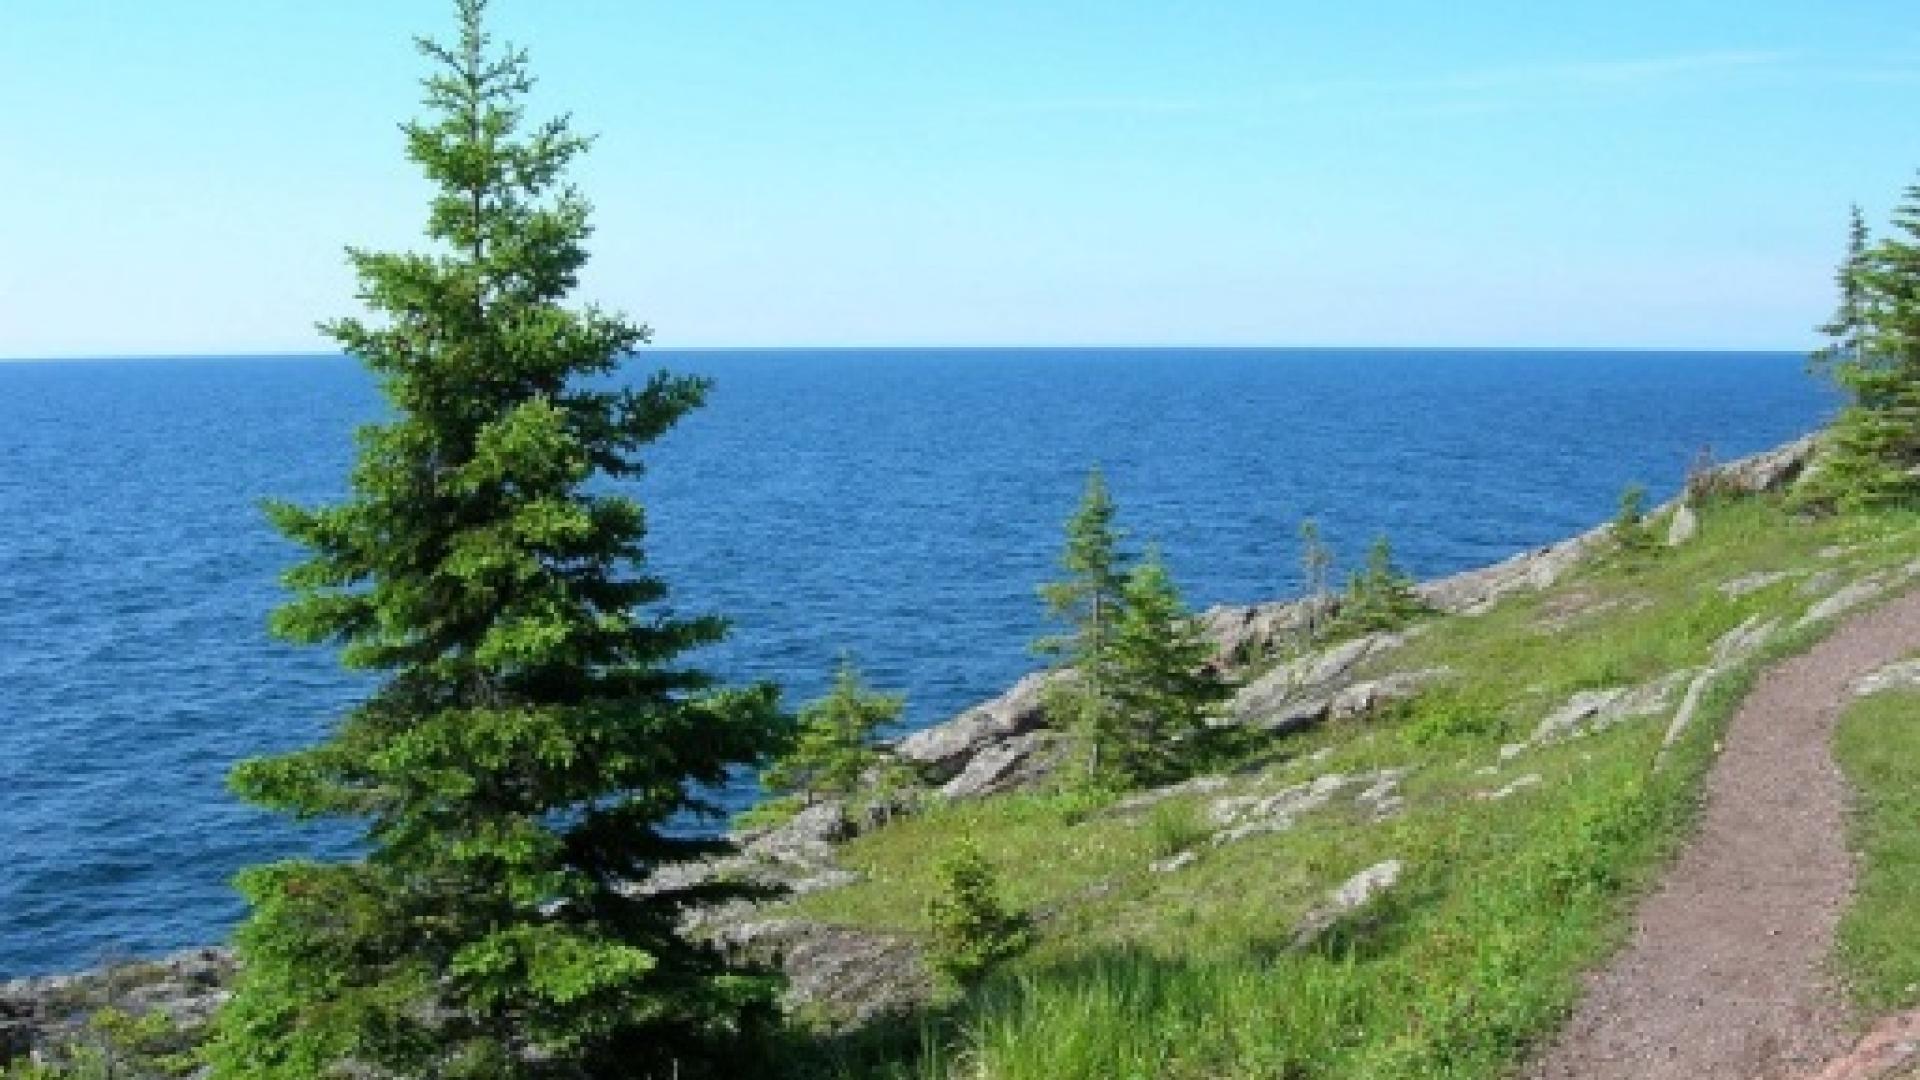 The Lake Superior shoreline